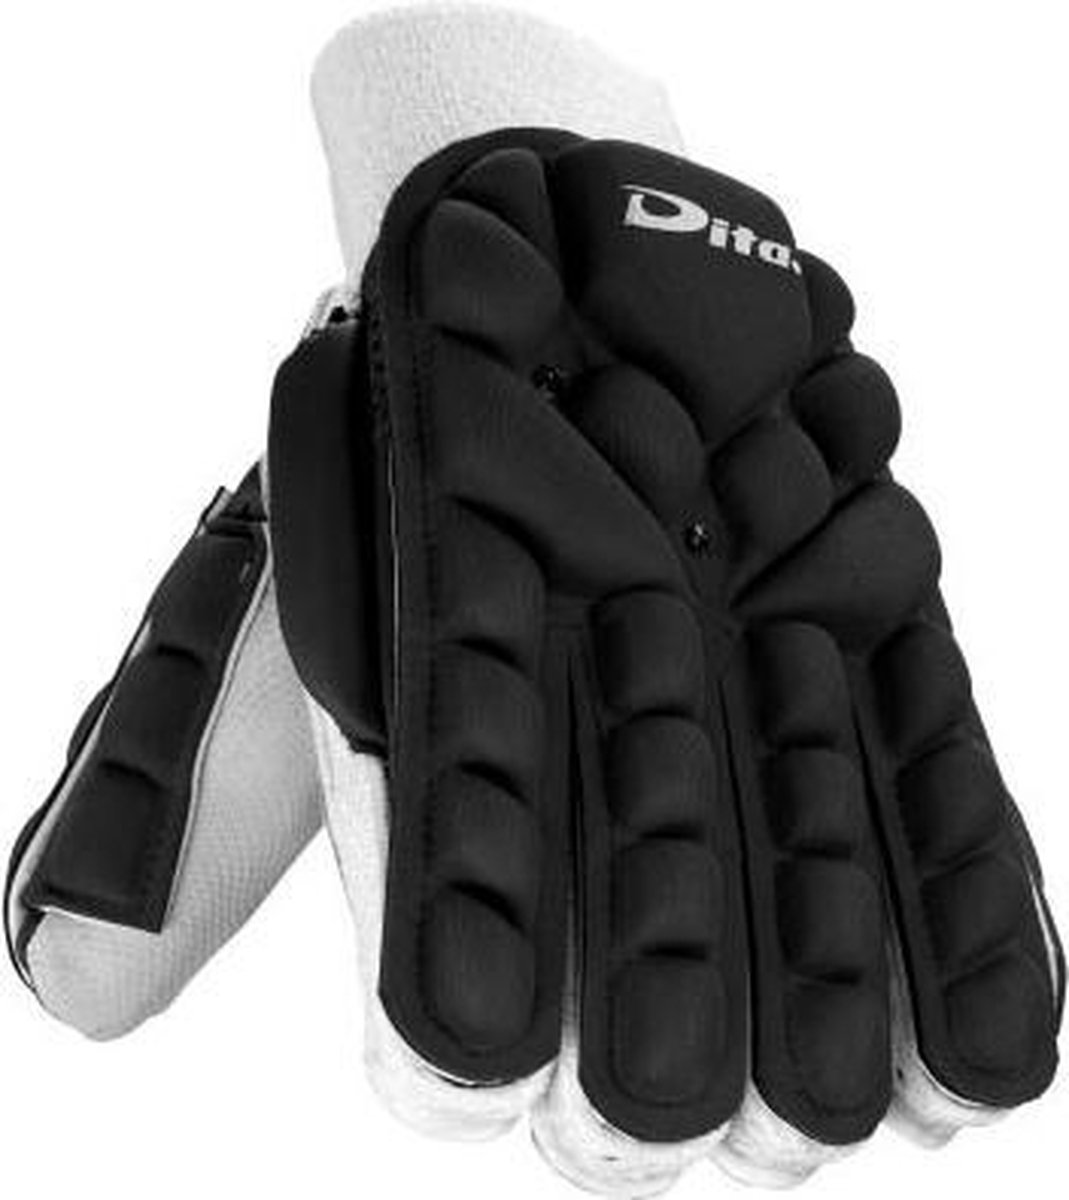 Dita Xtreme Full FP Hockeyhandschoen - Unisex - zwart/wit